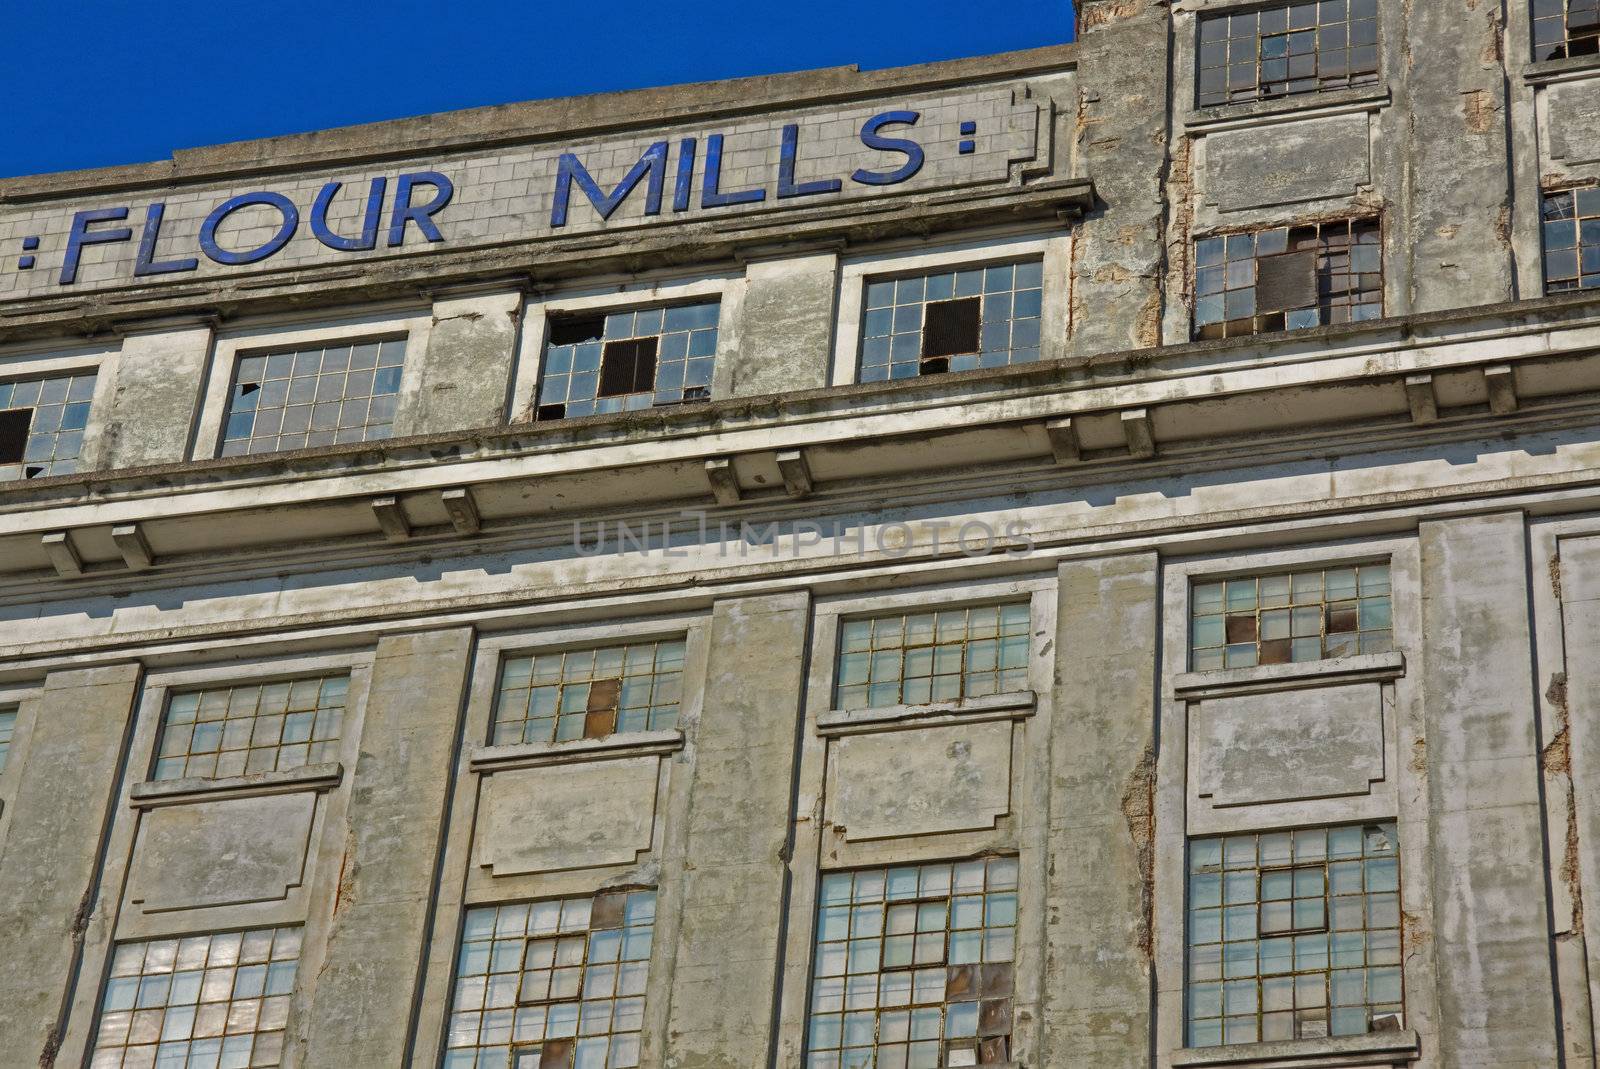 Derelict flour mills at Avonmouth docks